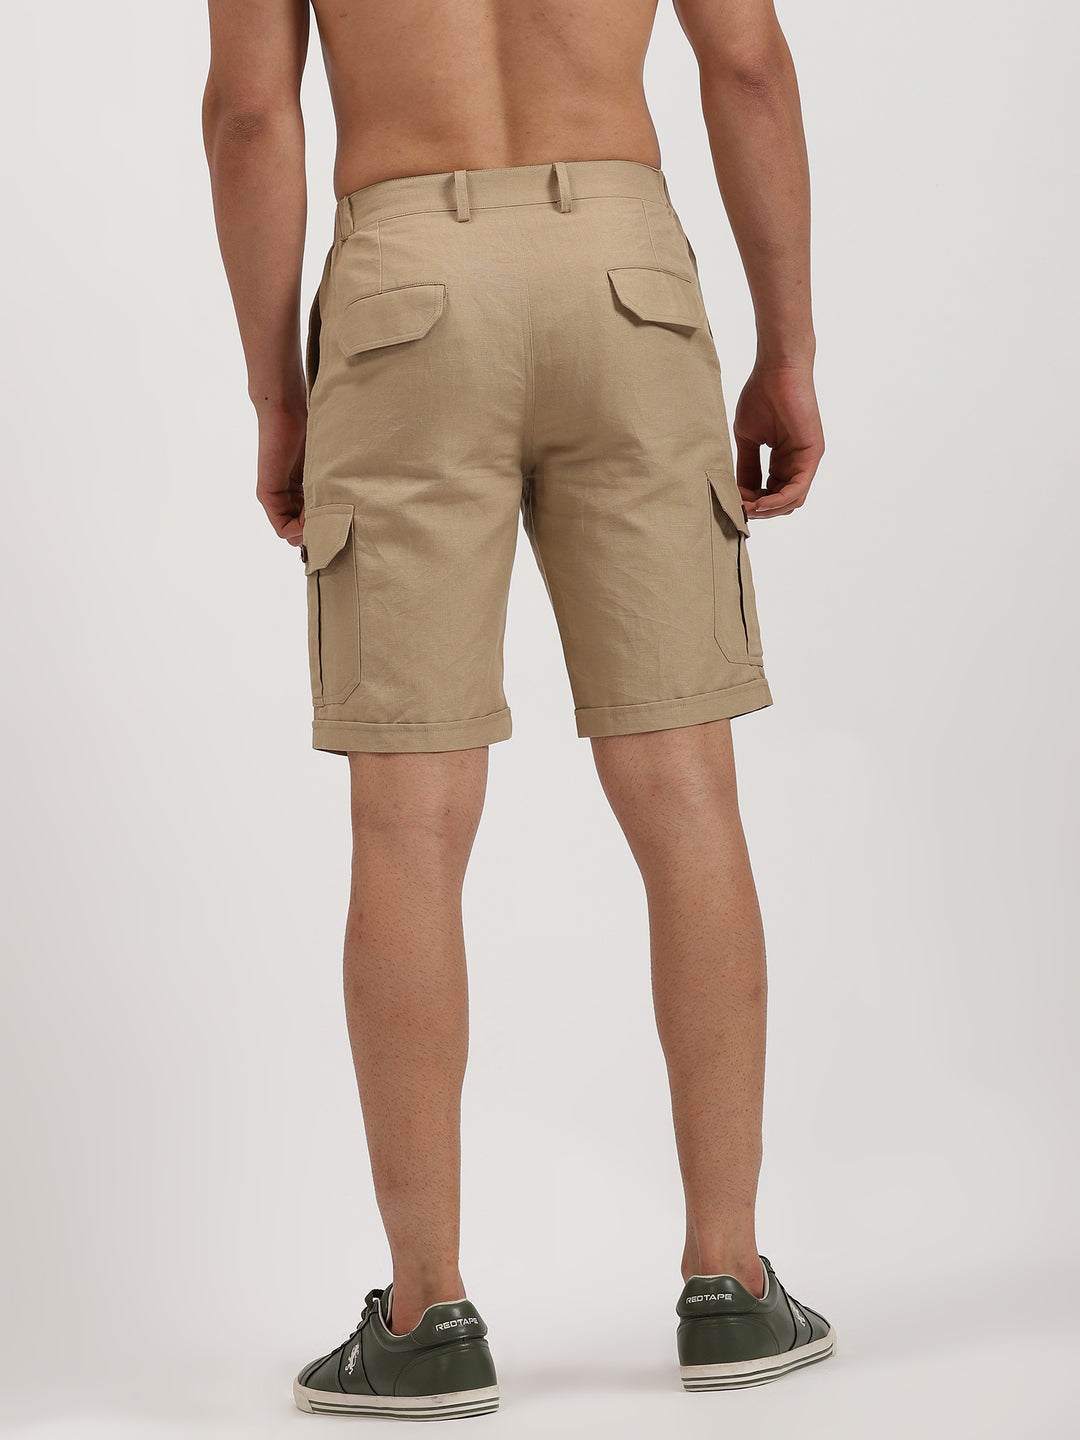 Reed - Linen Shorts - Khaki